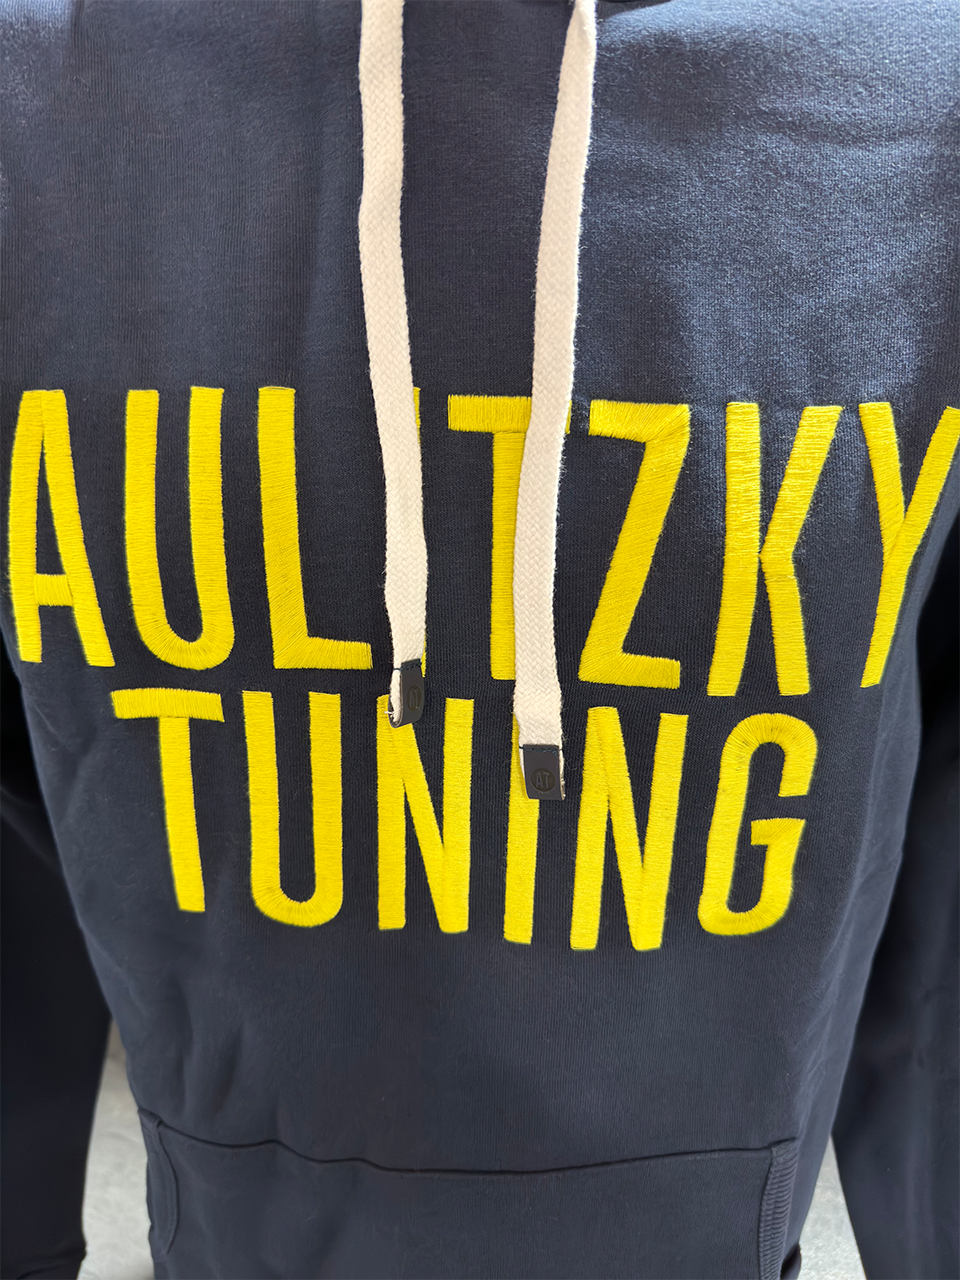 Aulitzky Tuning | Hoodie | dunkelblau neongelb | ABVERKAUF